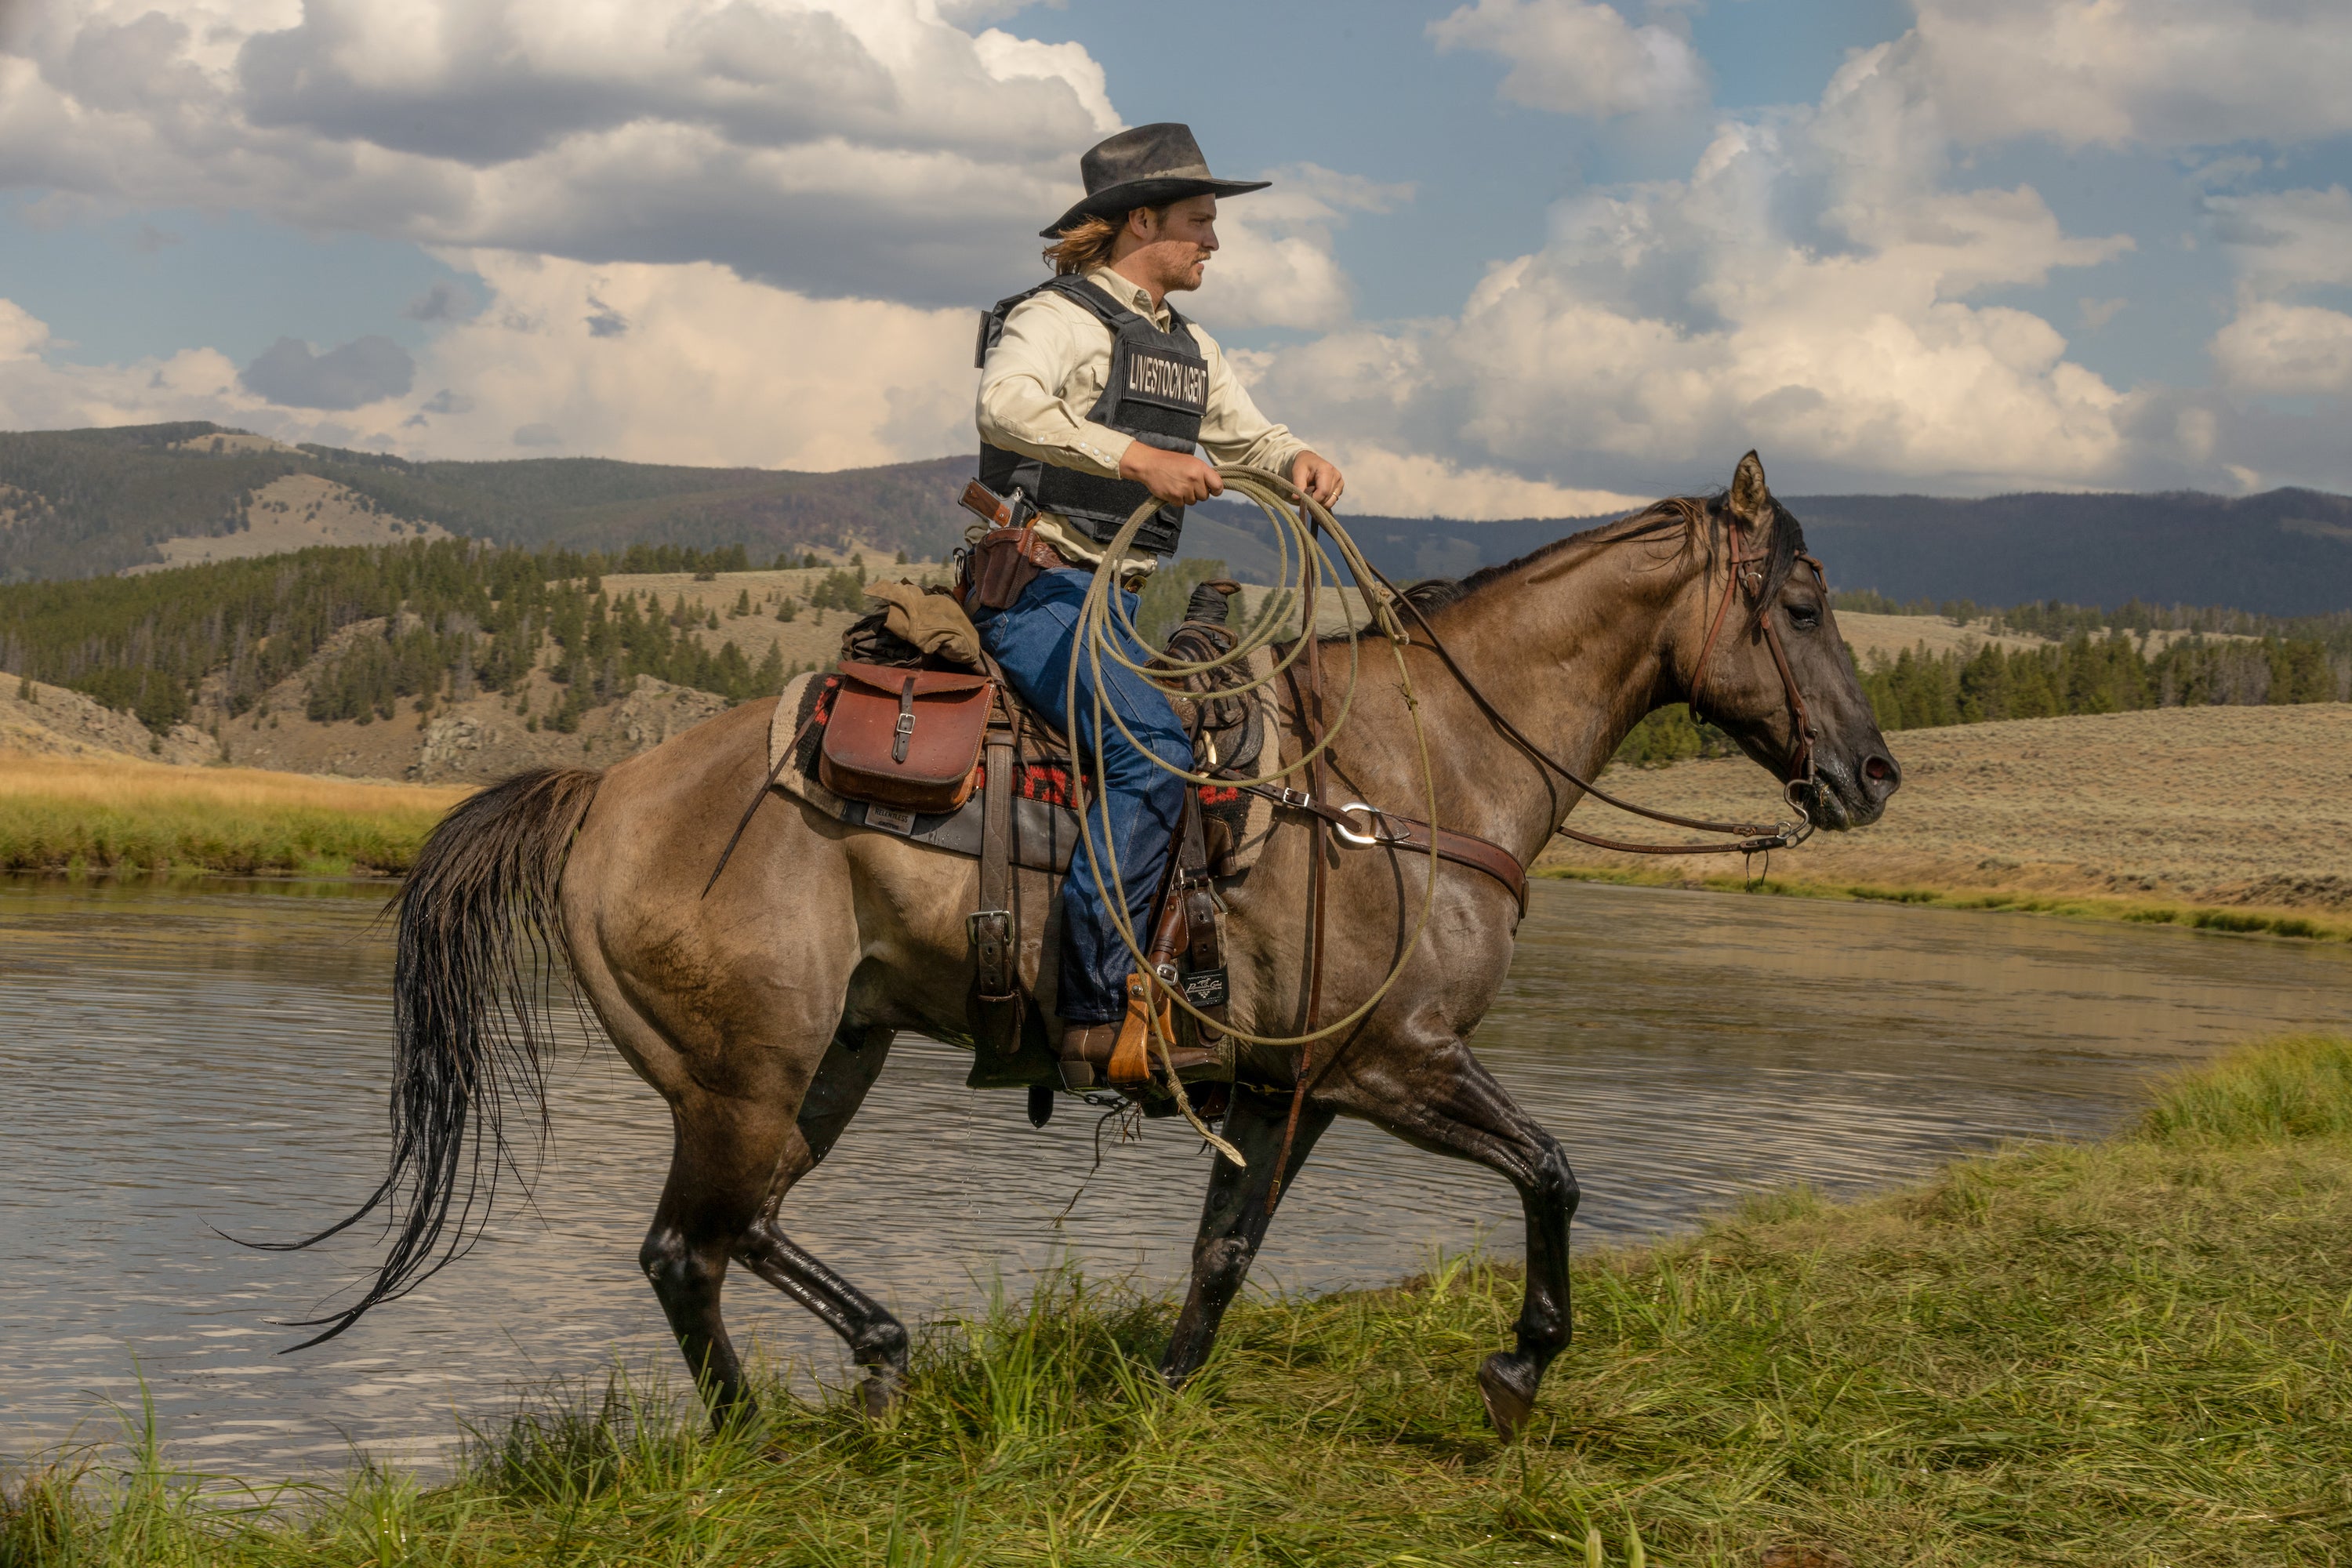 Cowpoke: Luke Grimes on horseback in ‘Yellowstone’